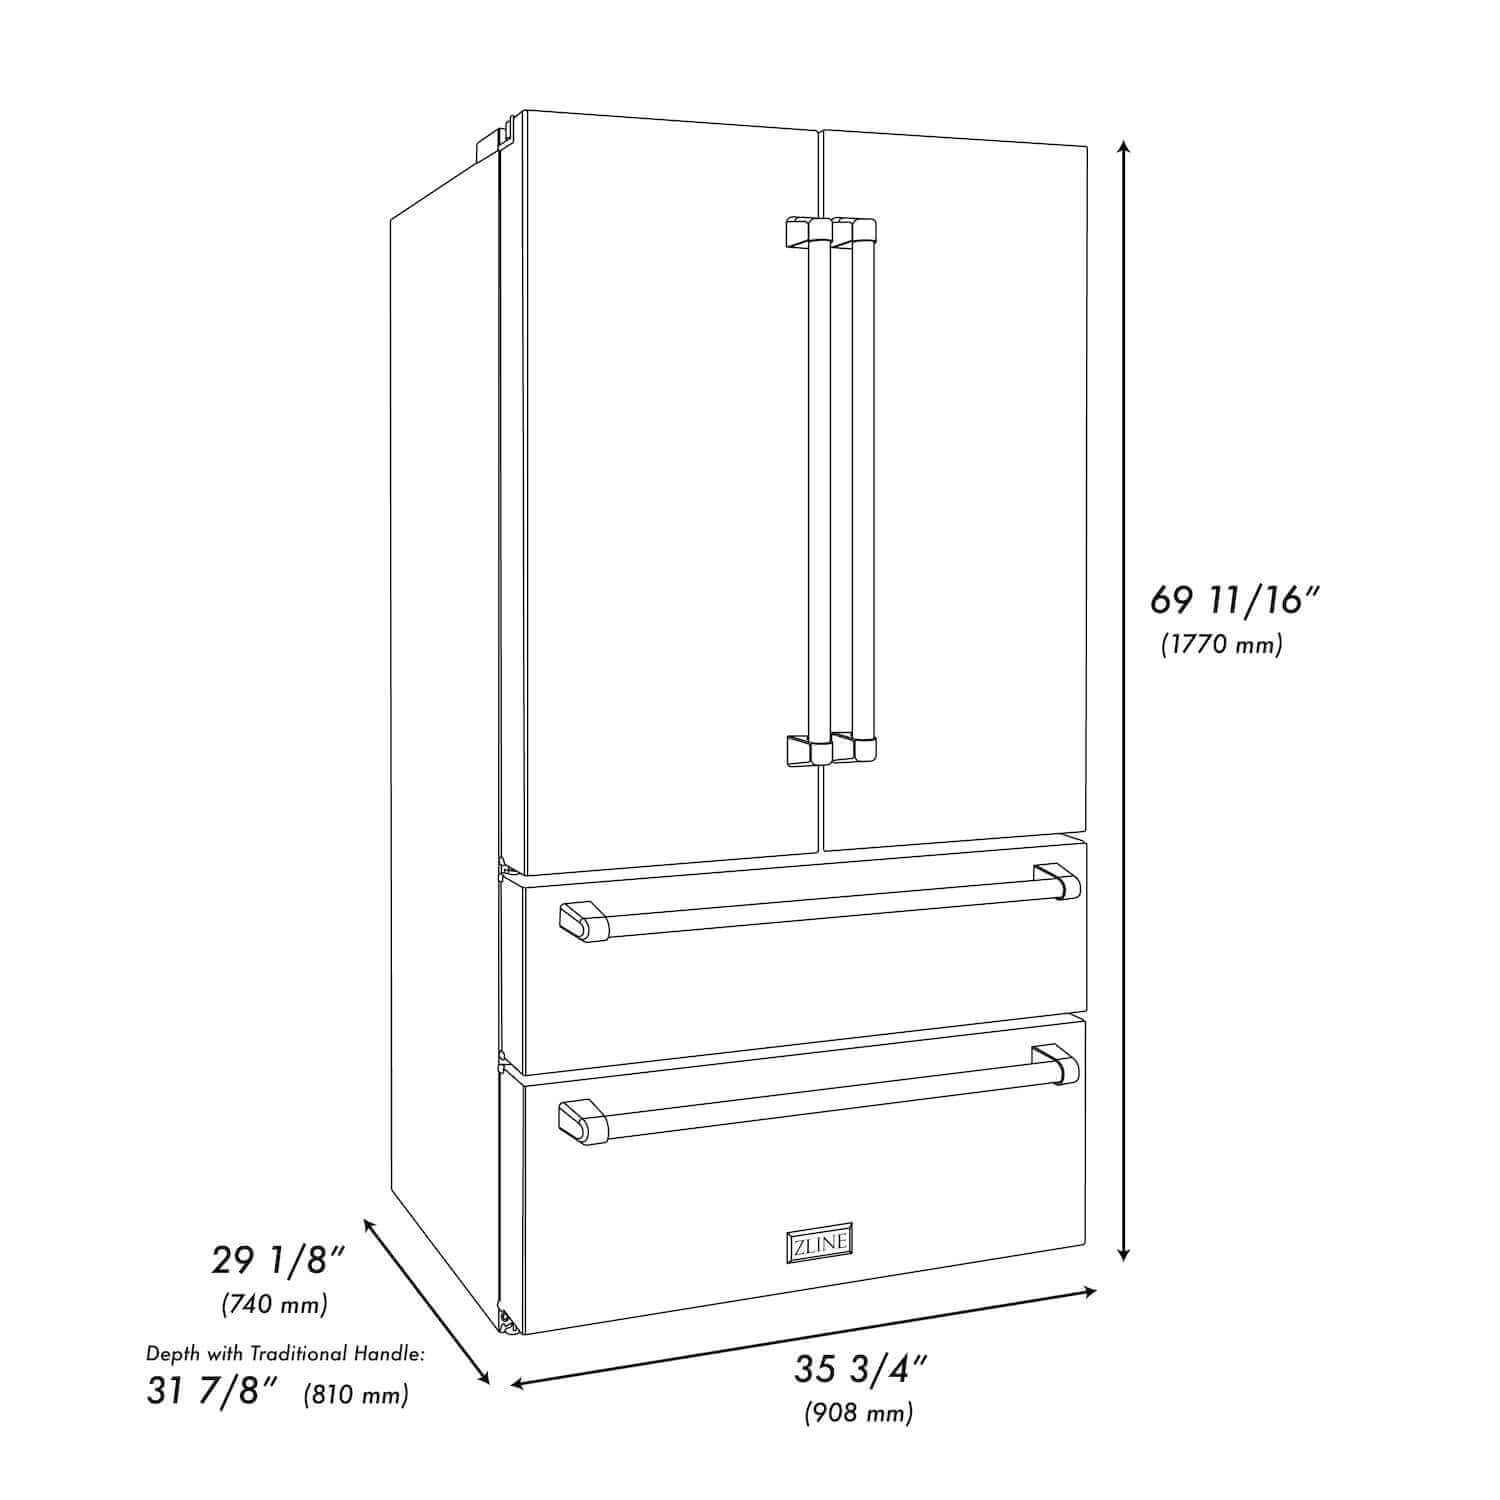 ZLINE 36" French door refrigerator (RFM-36) dimensional diagram.